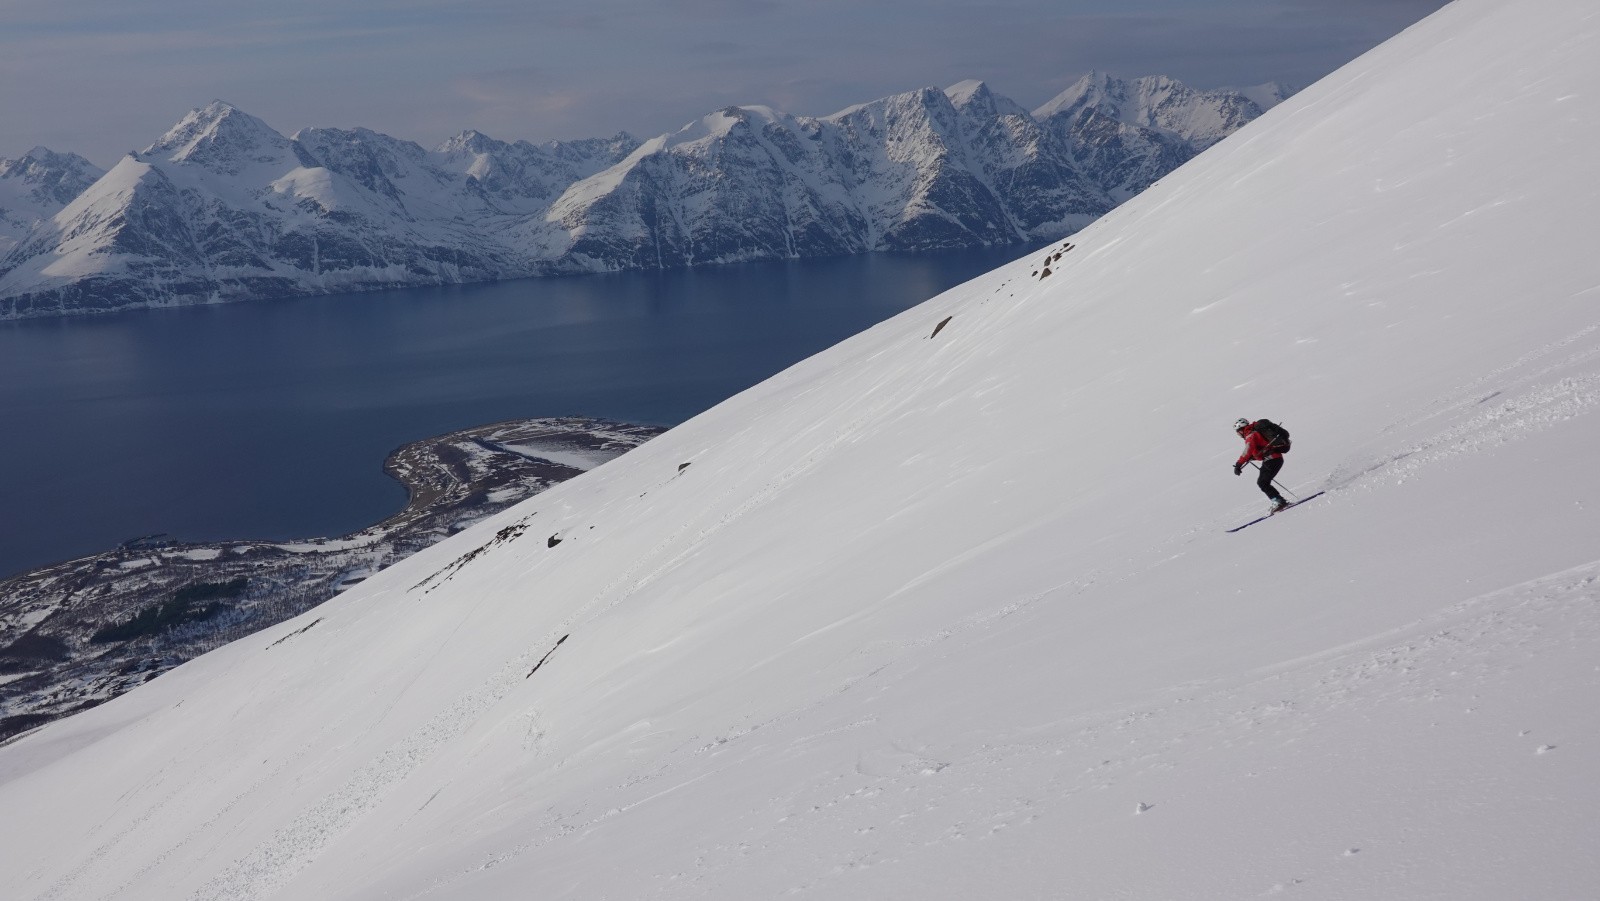 Et toujours du ski grand large avec vue fjord 